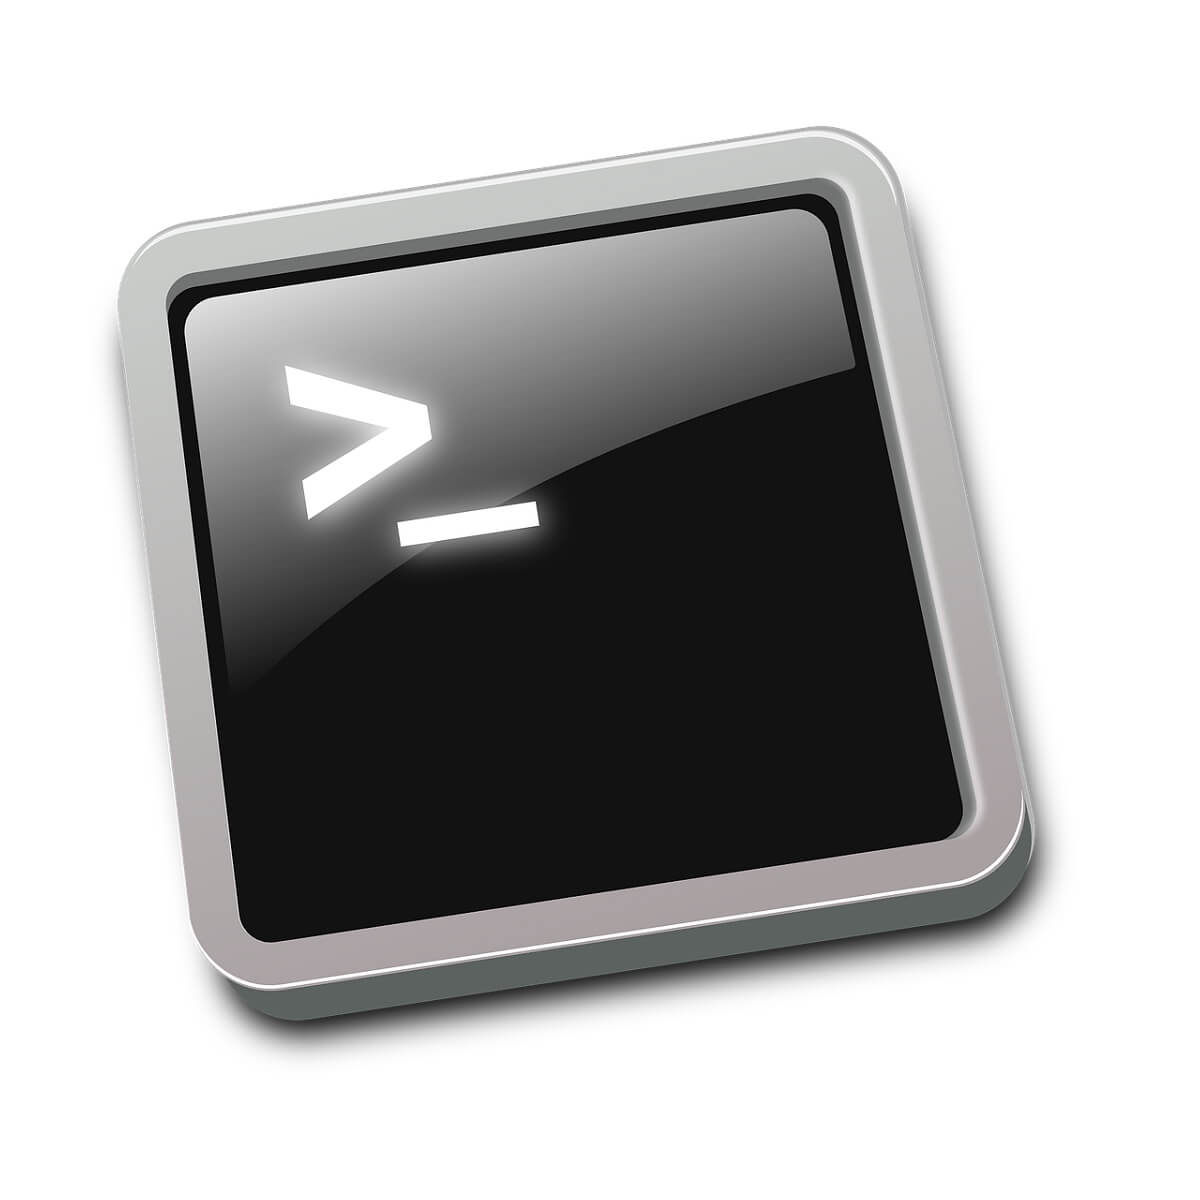 Simple method to install Linux Bash on Windows 10